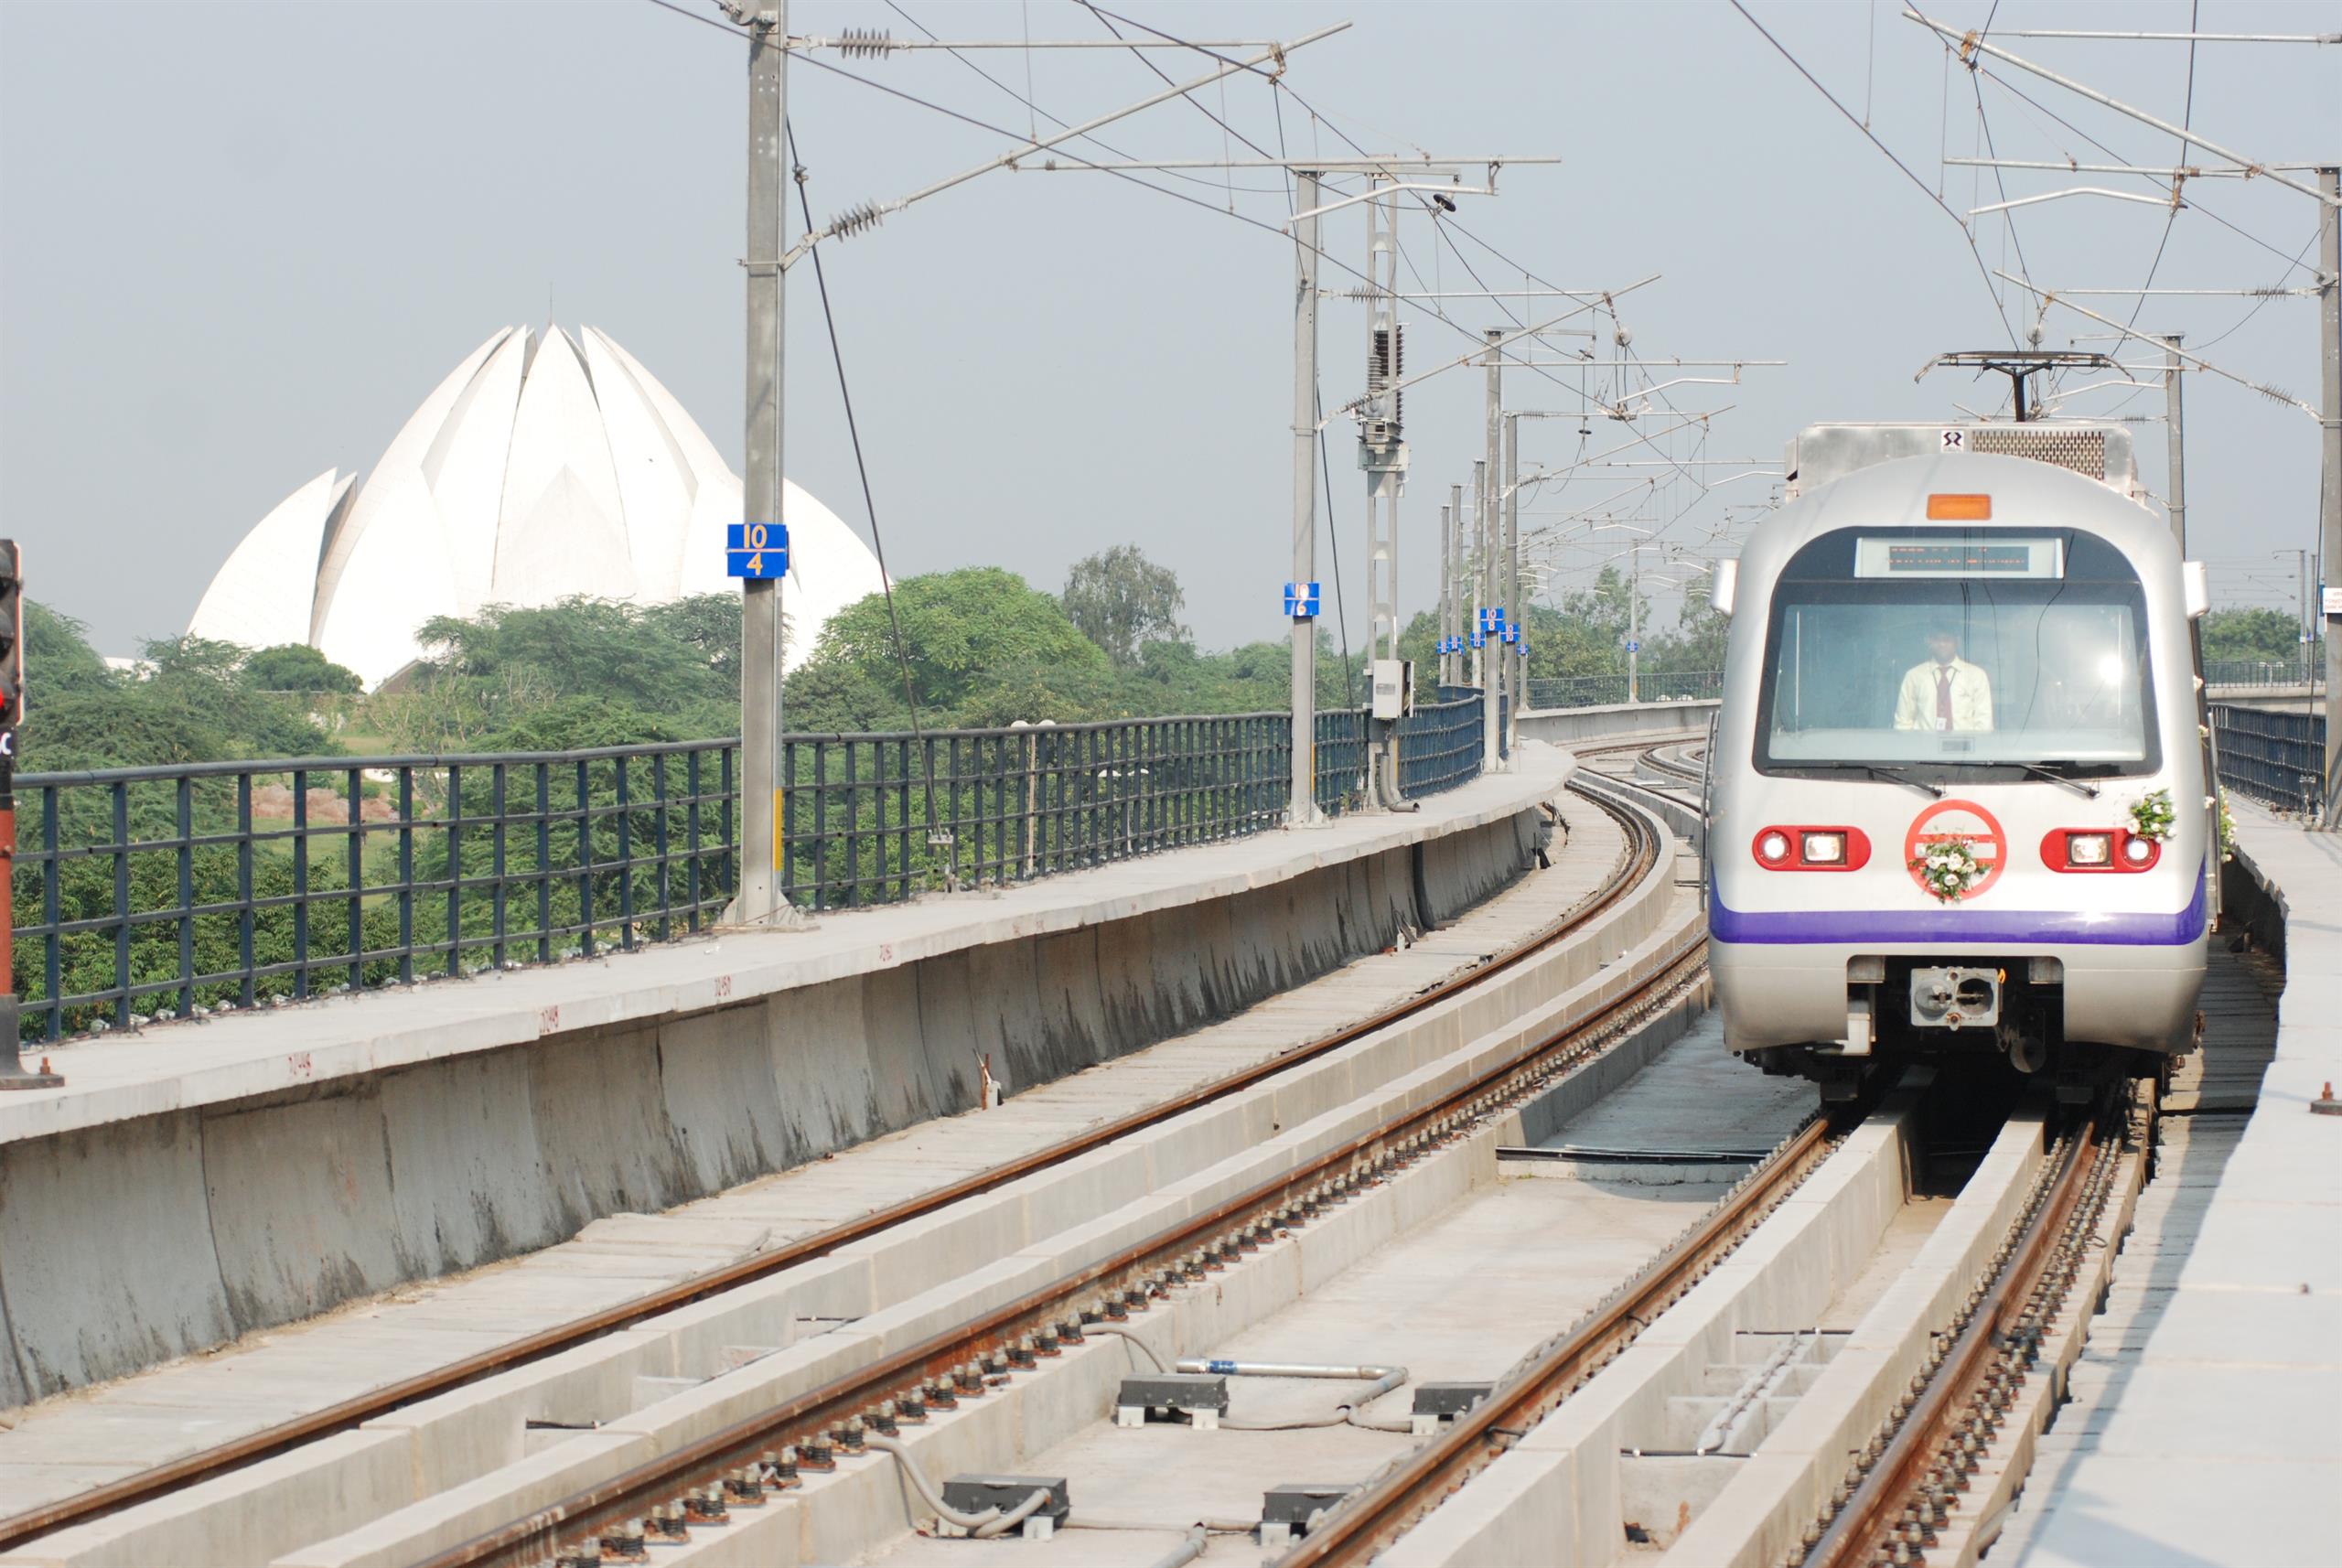 image of Delhi metro train, front-on view